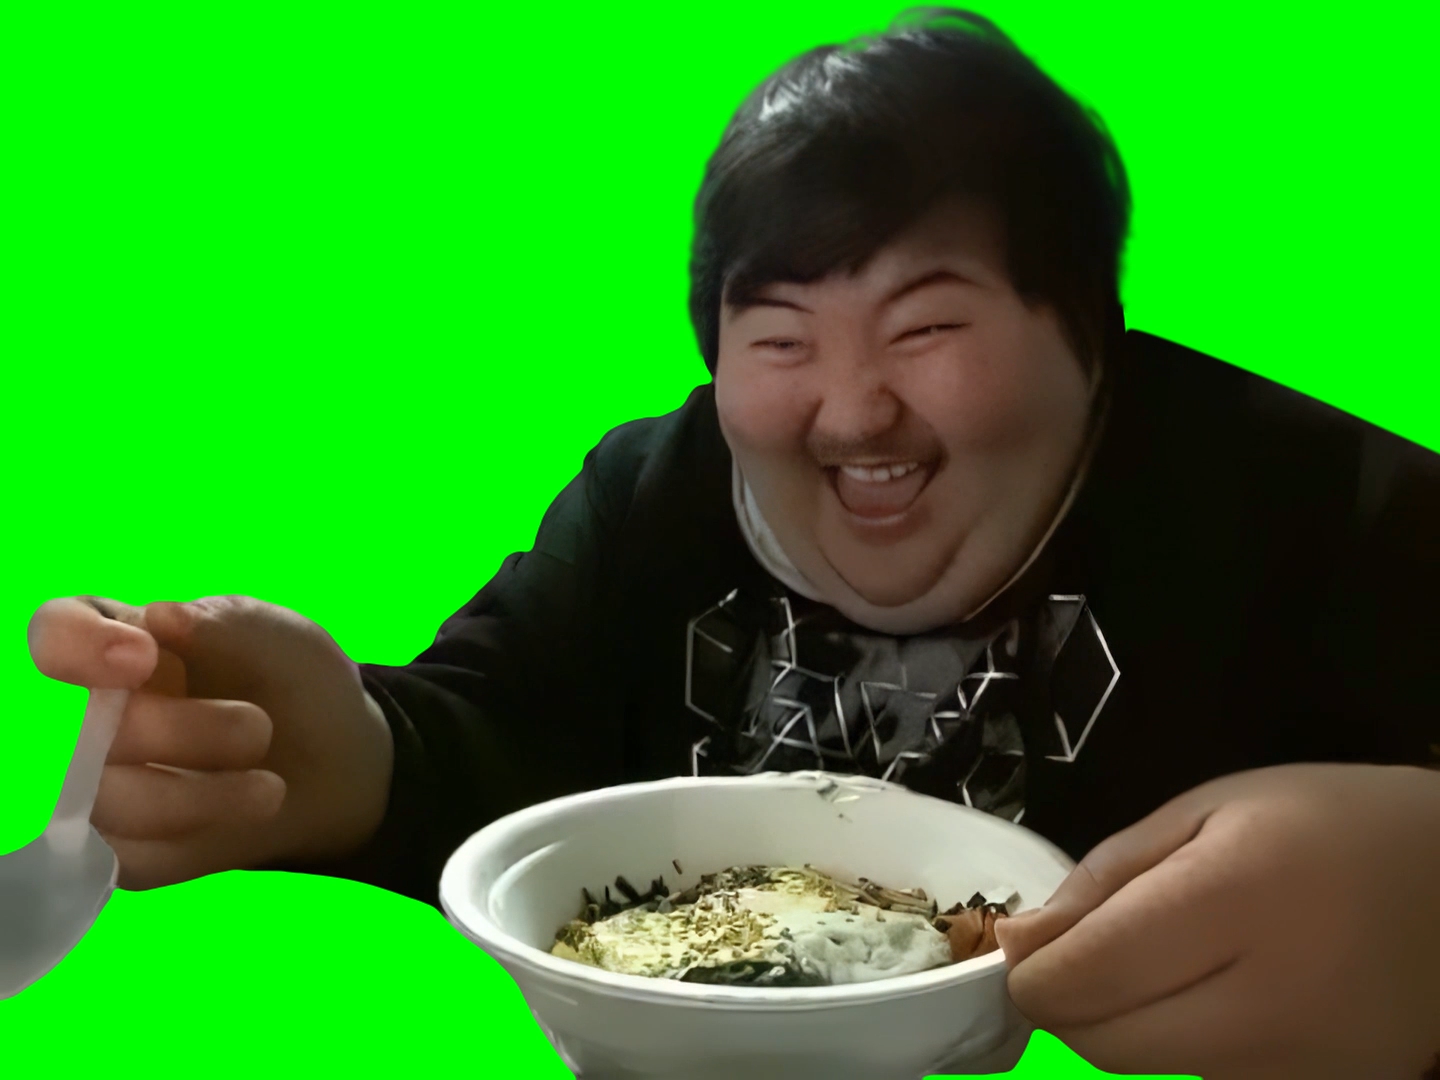 Asian Man Laughing and Choking before Eating meme (Green Screen)